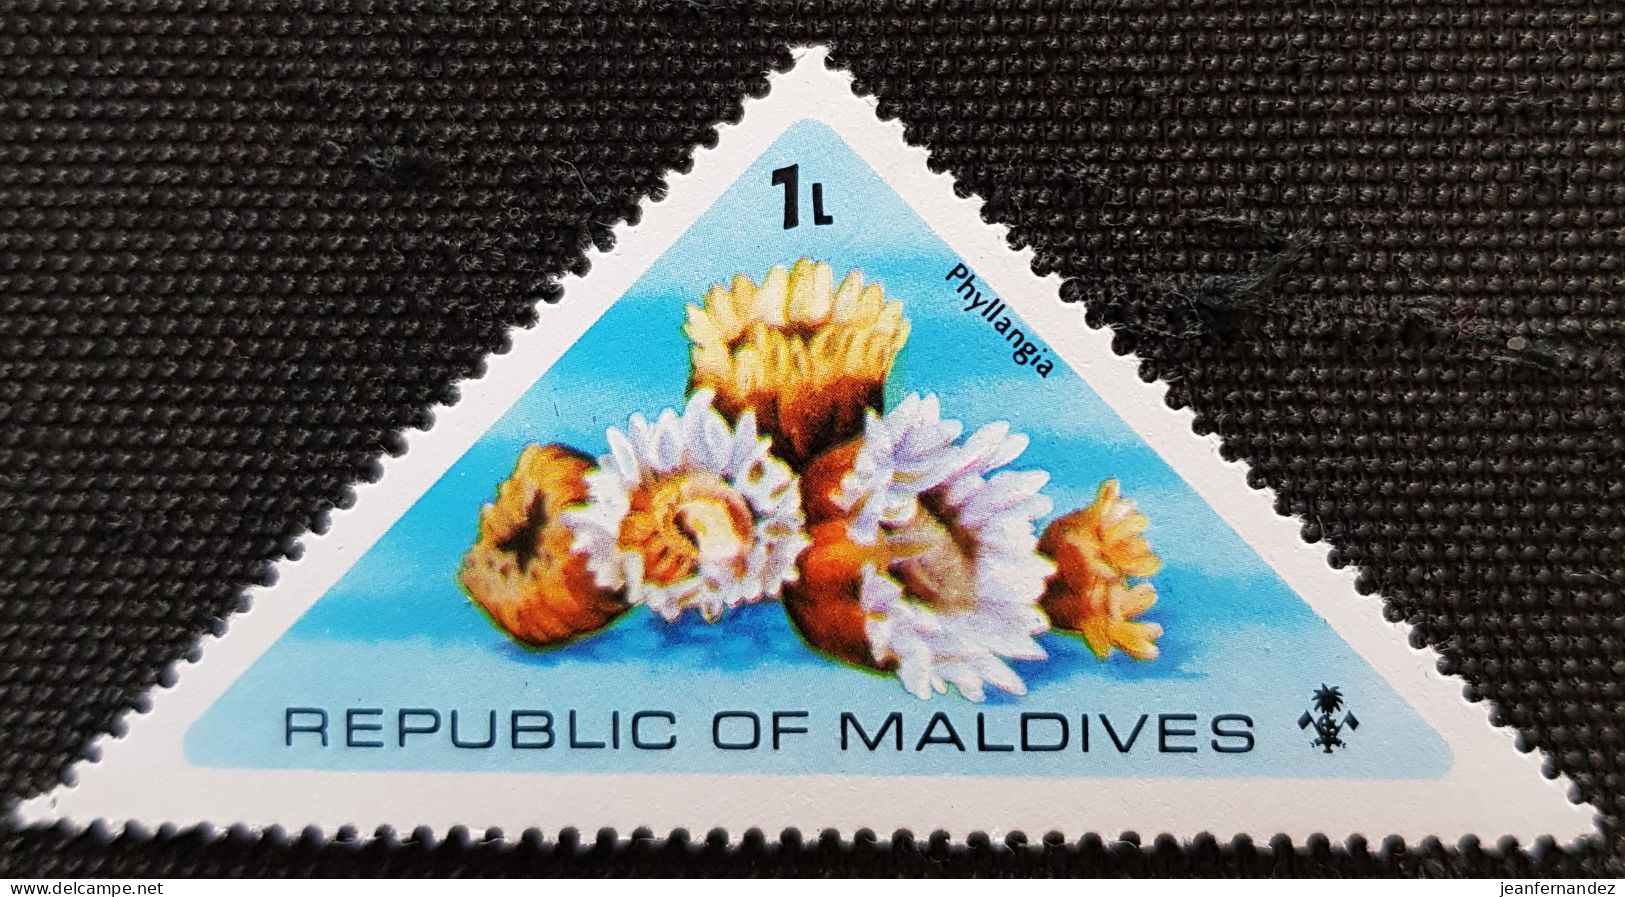 Maldives 1975 Marine Life  Stampworld N° 577 - Malediven (1965-...)